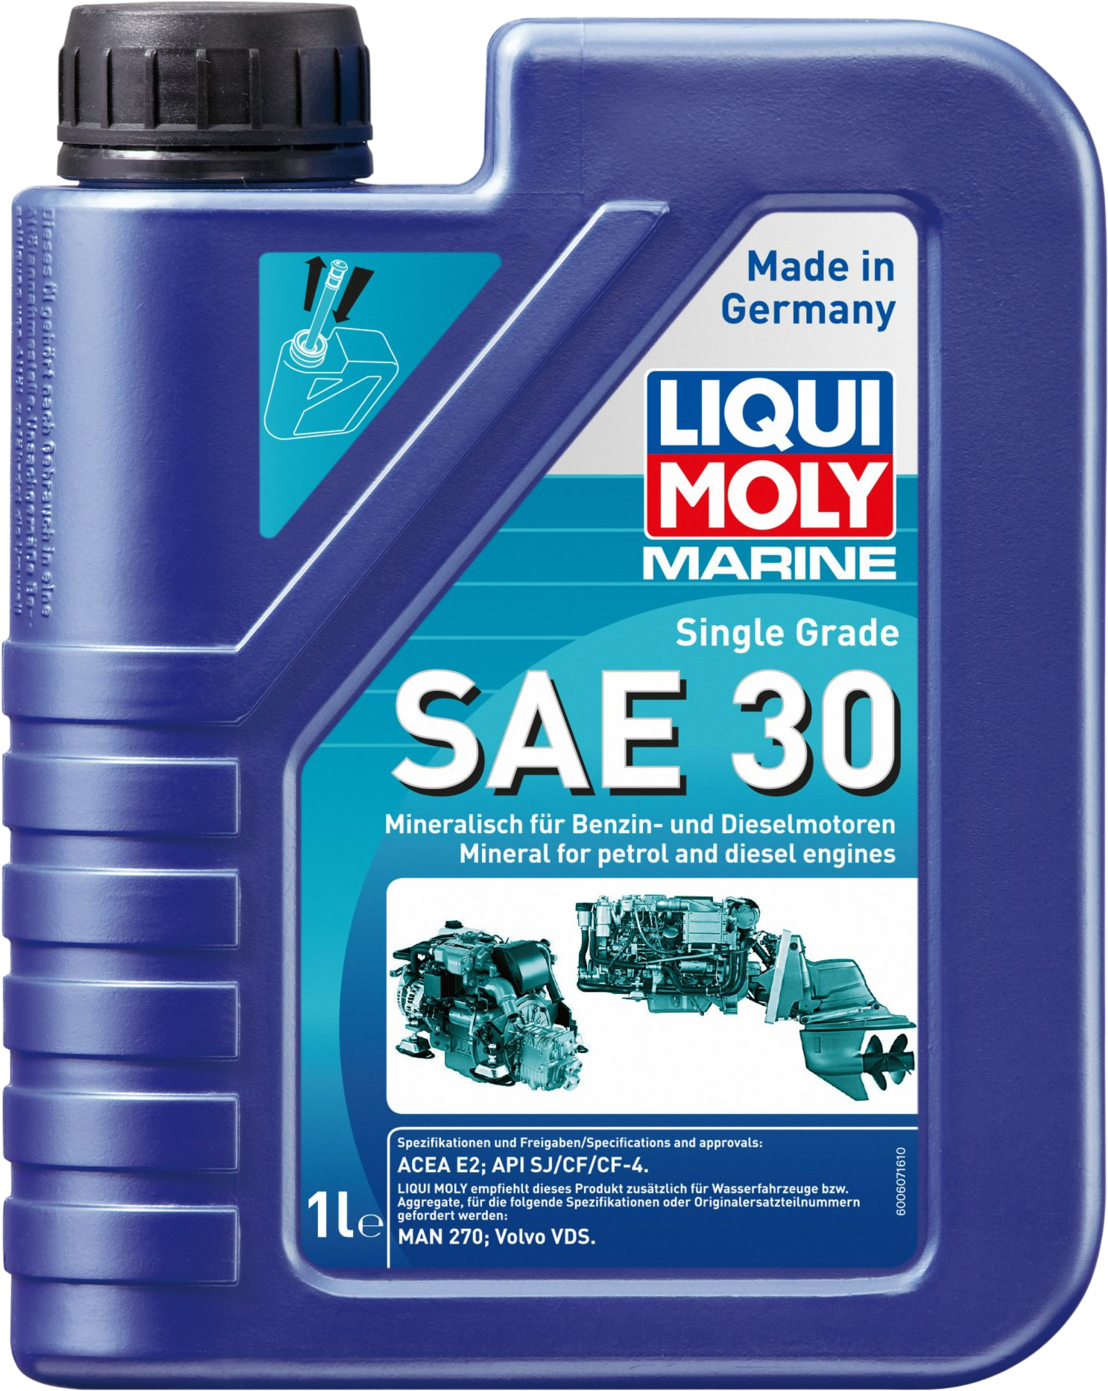 LM25065-1 Universeel toepasbaar in benzine- en dieselmotoren, alsmede in transmissies waarbij de fabrikant een minerale olie conform SAE 30 eist.